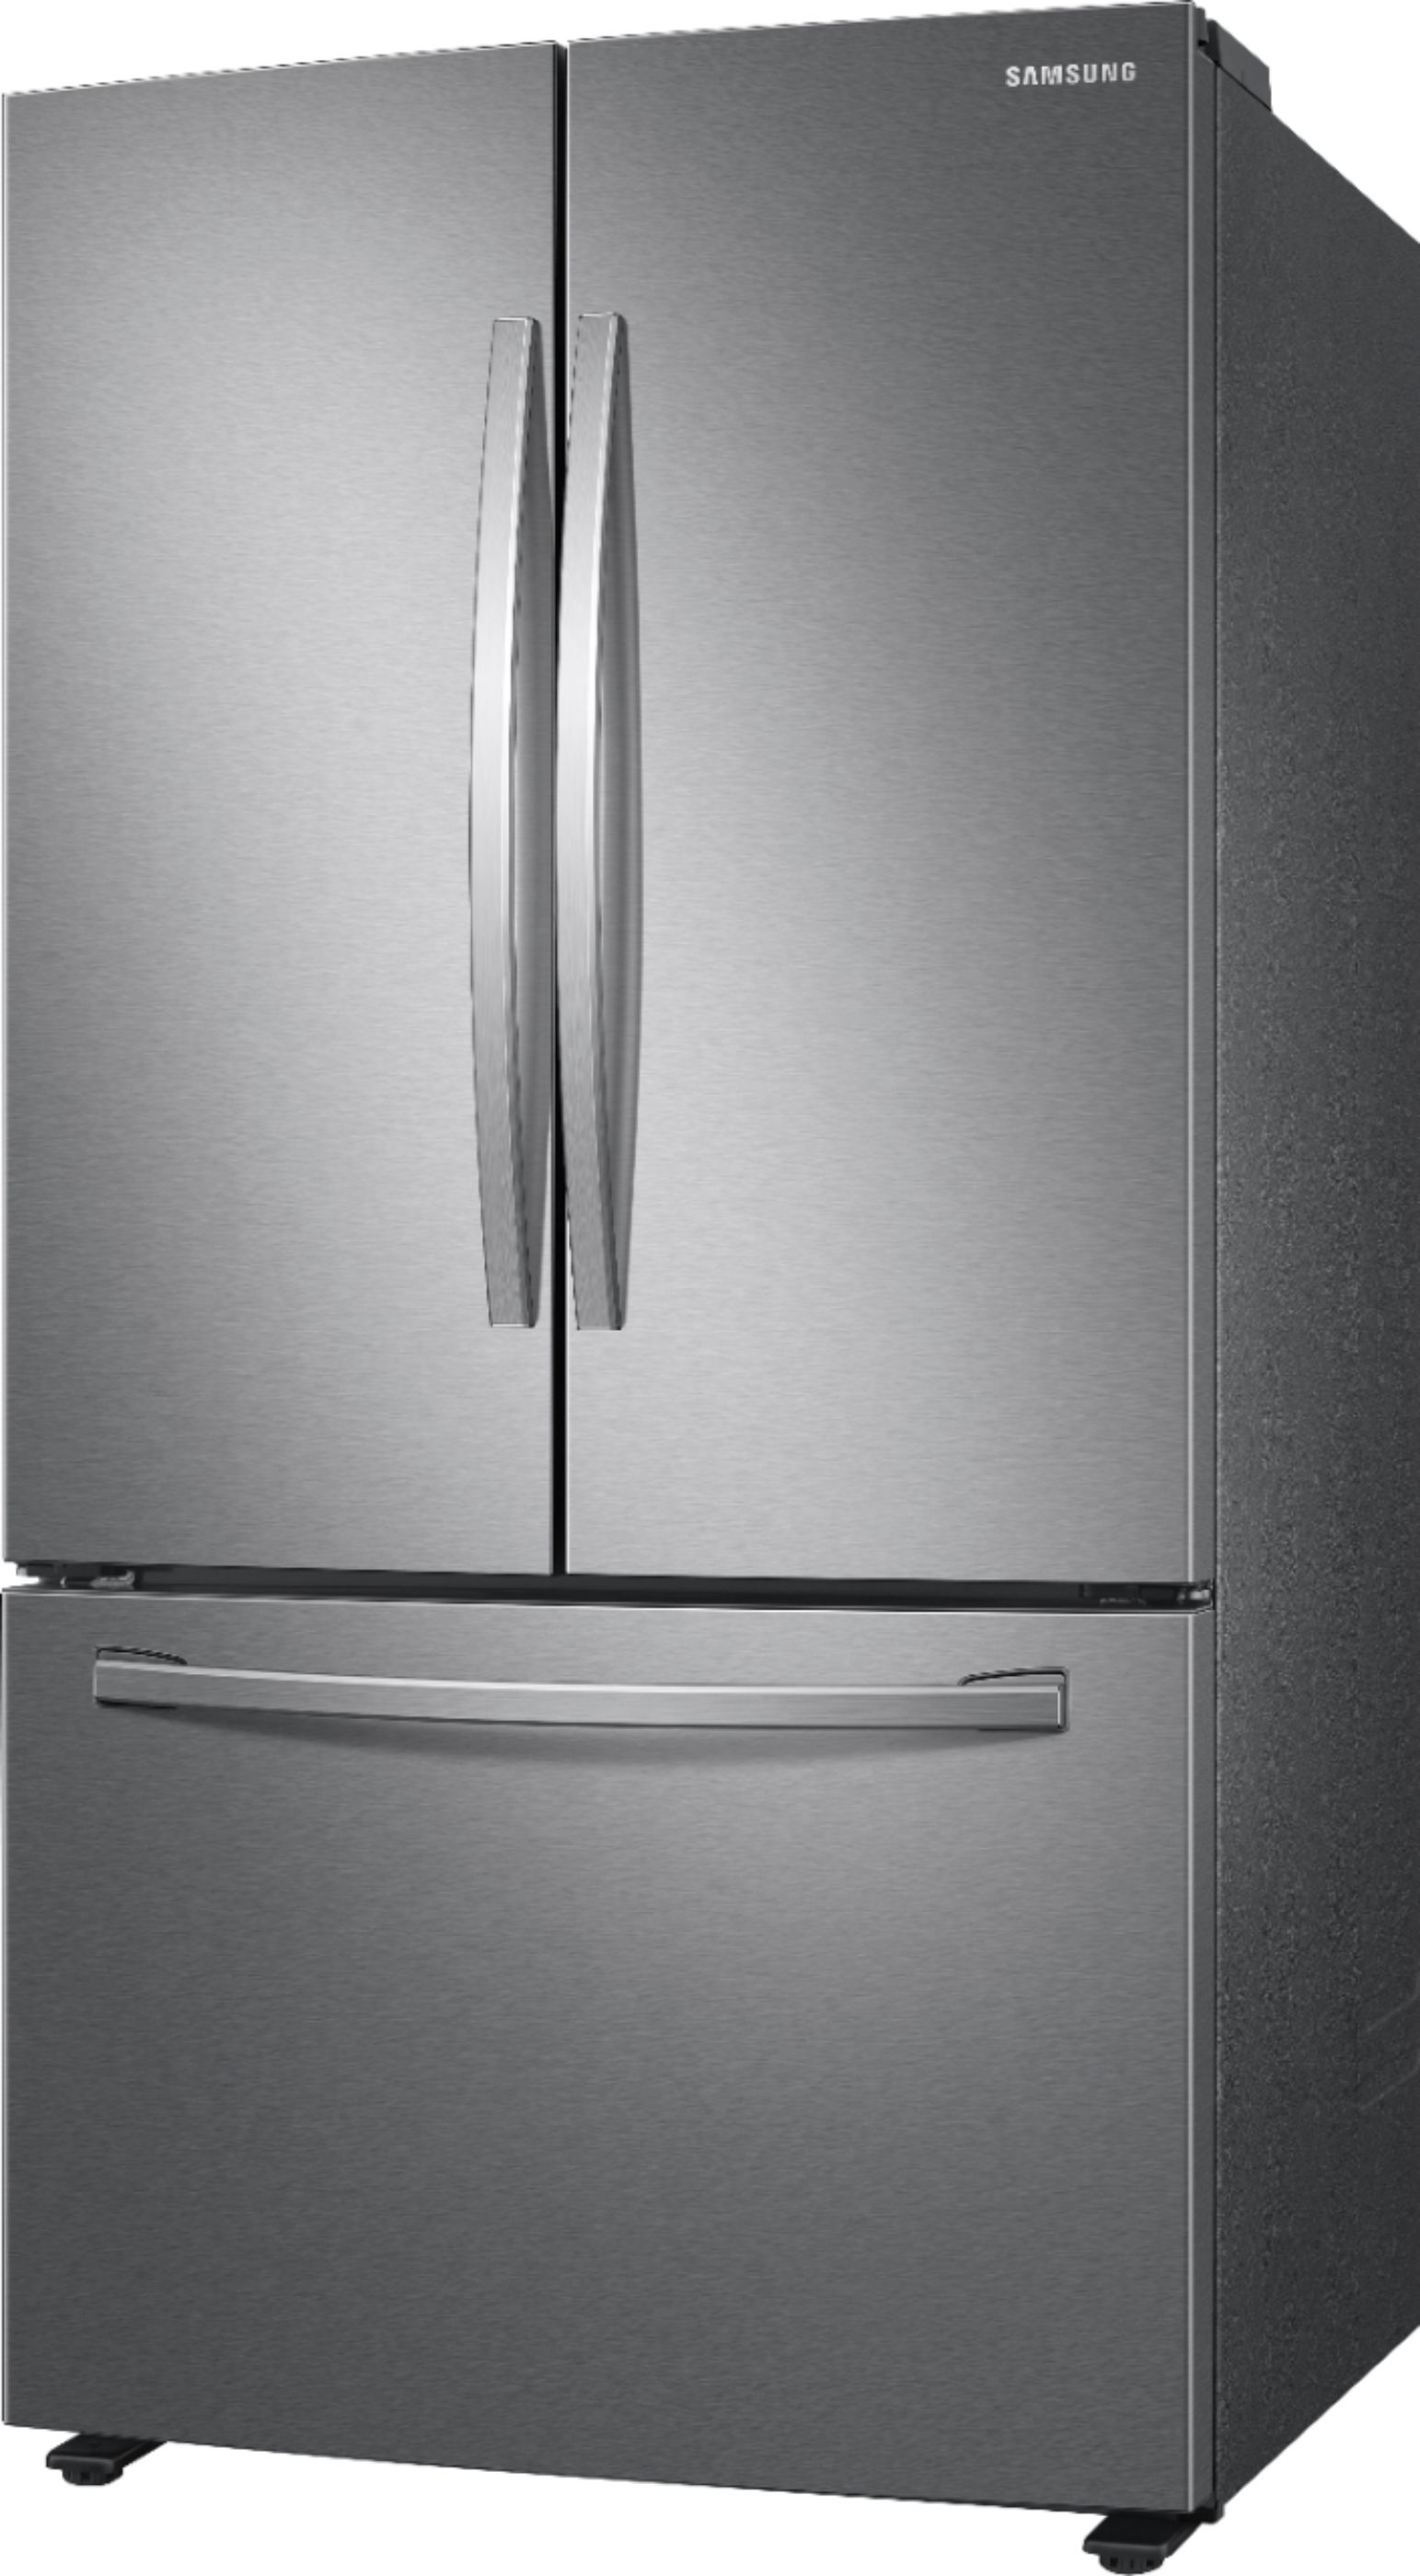 Left View: Whirlpool - 19.3 Cu. Ft. Top-Freezer Refrigerator - Black